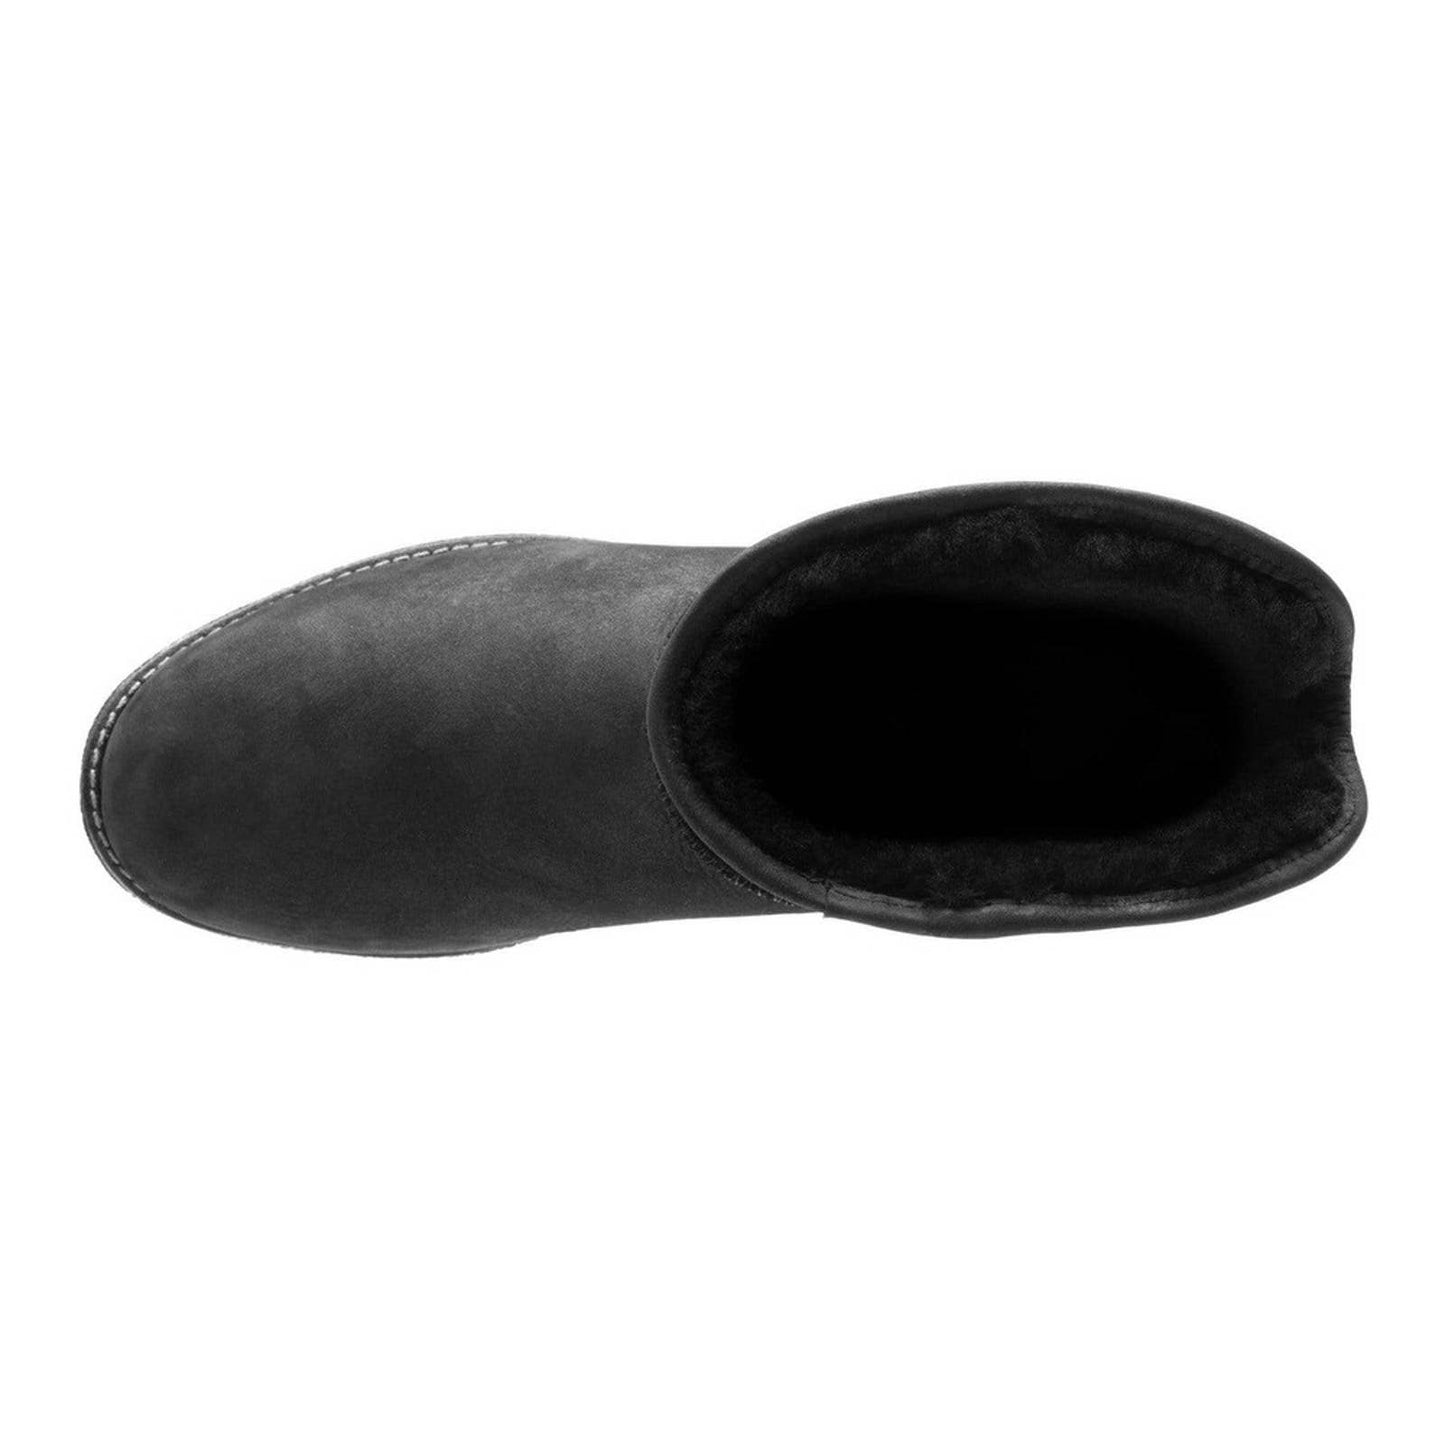 NWT abeo Pro Burlington Boots Black Oiled Winter Boots